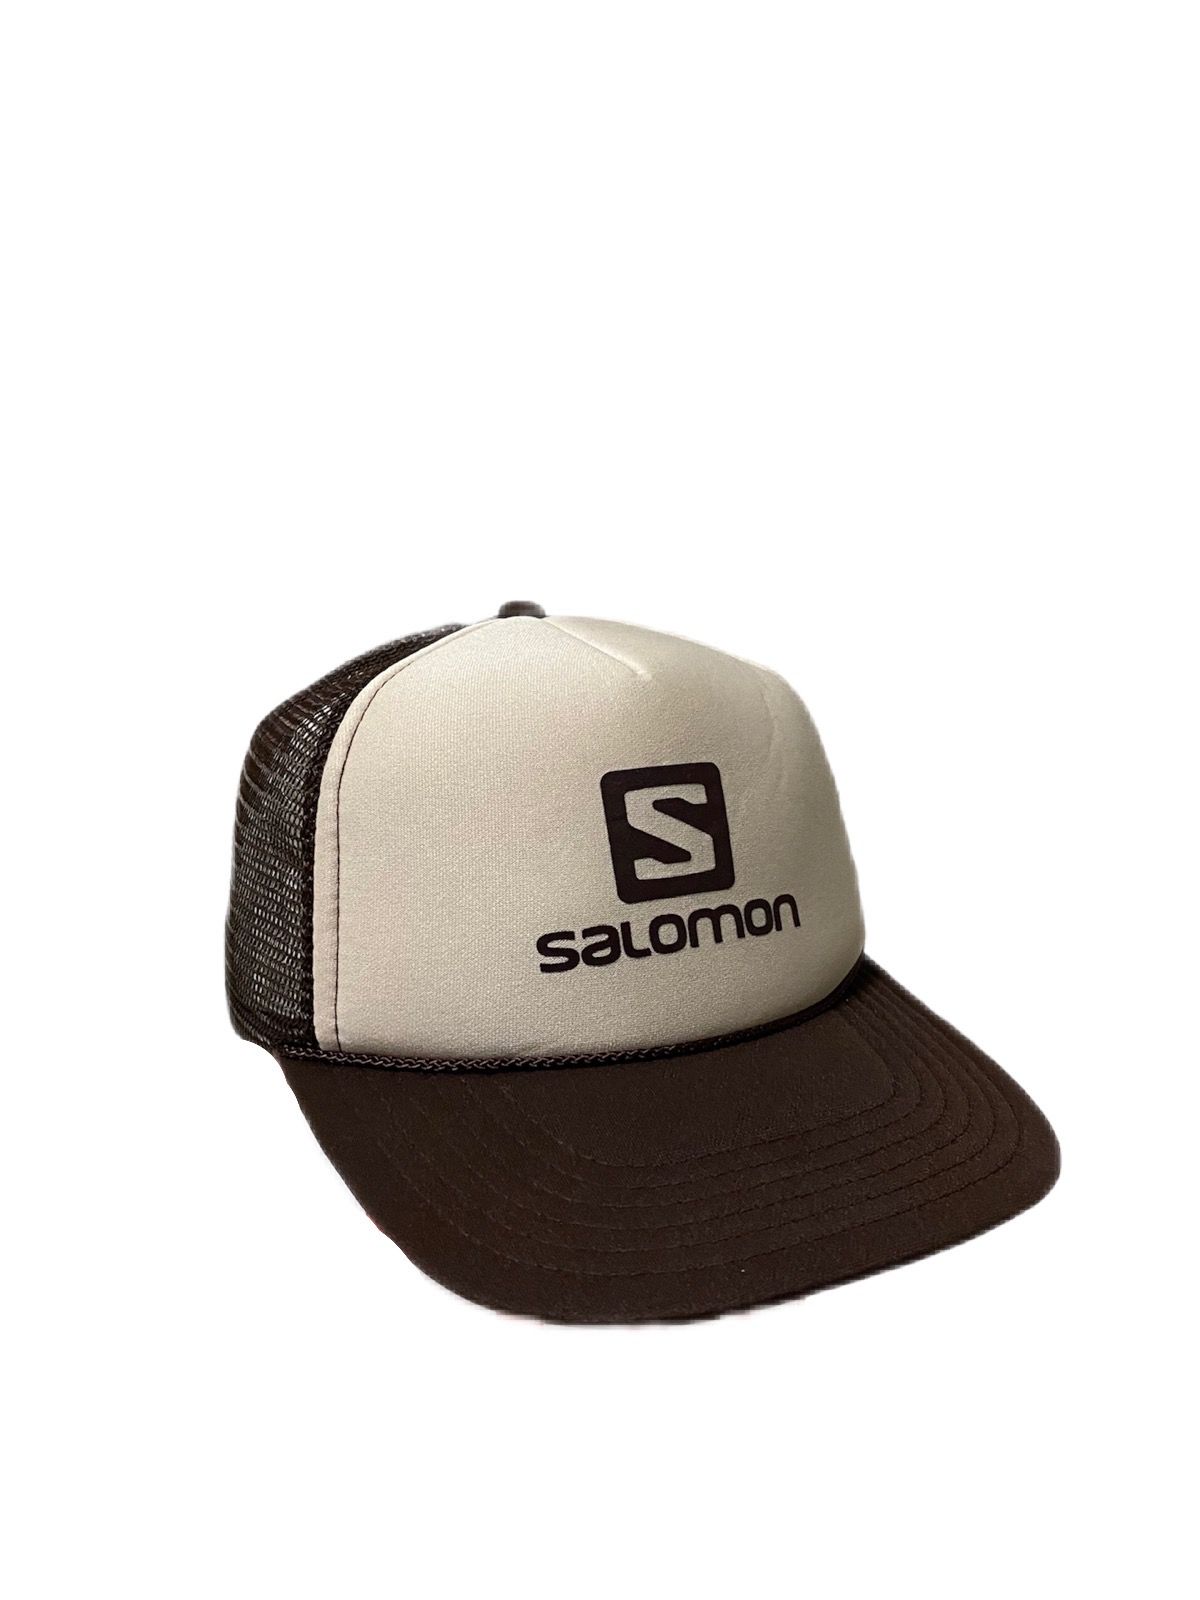 Vintage Salomon Ski By Otto Trucker Hats - 1